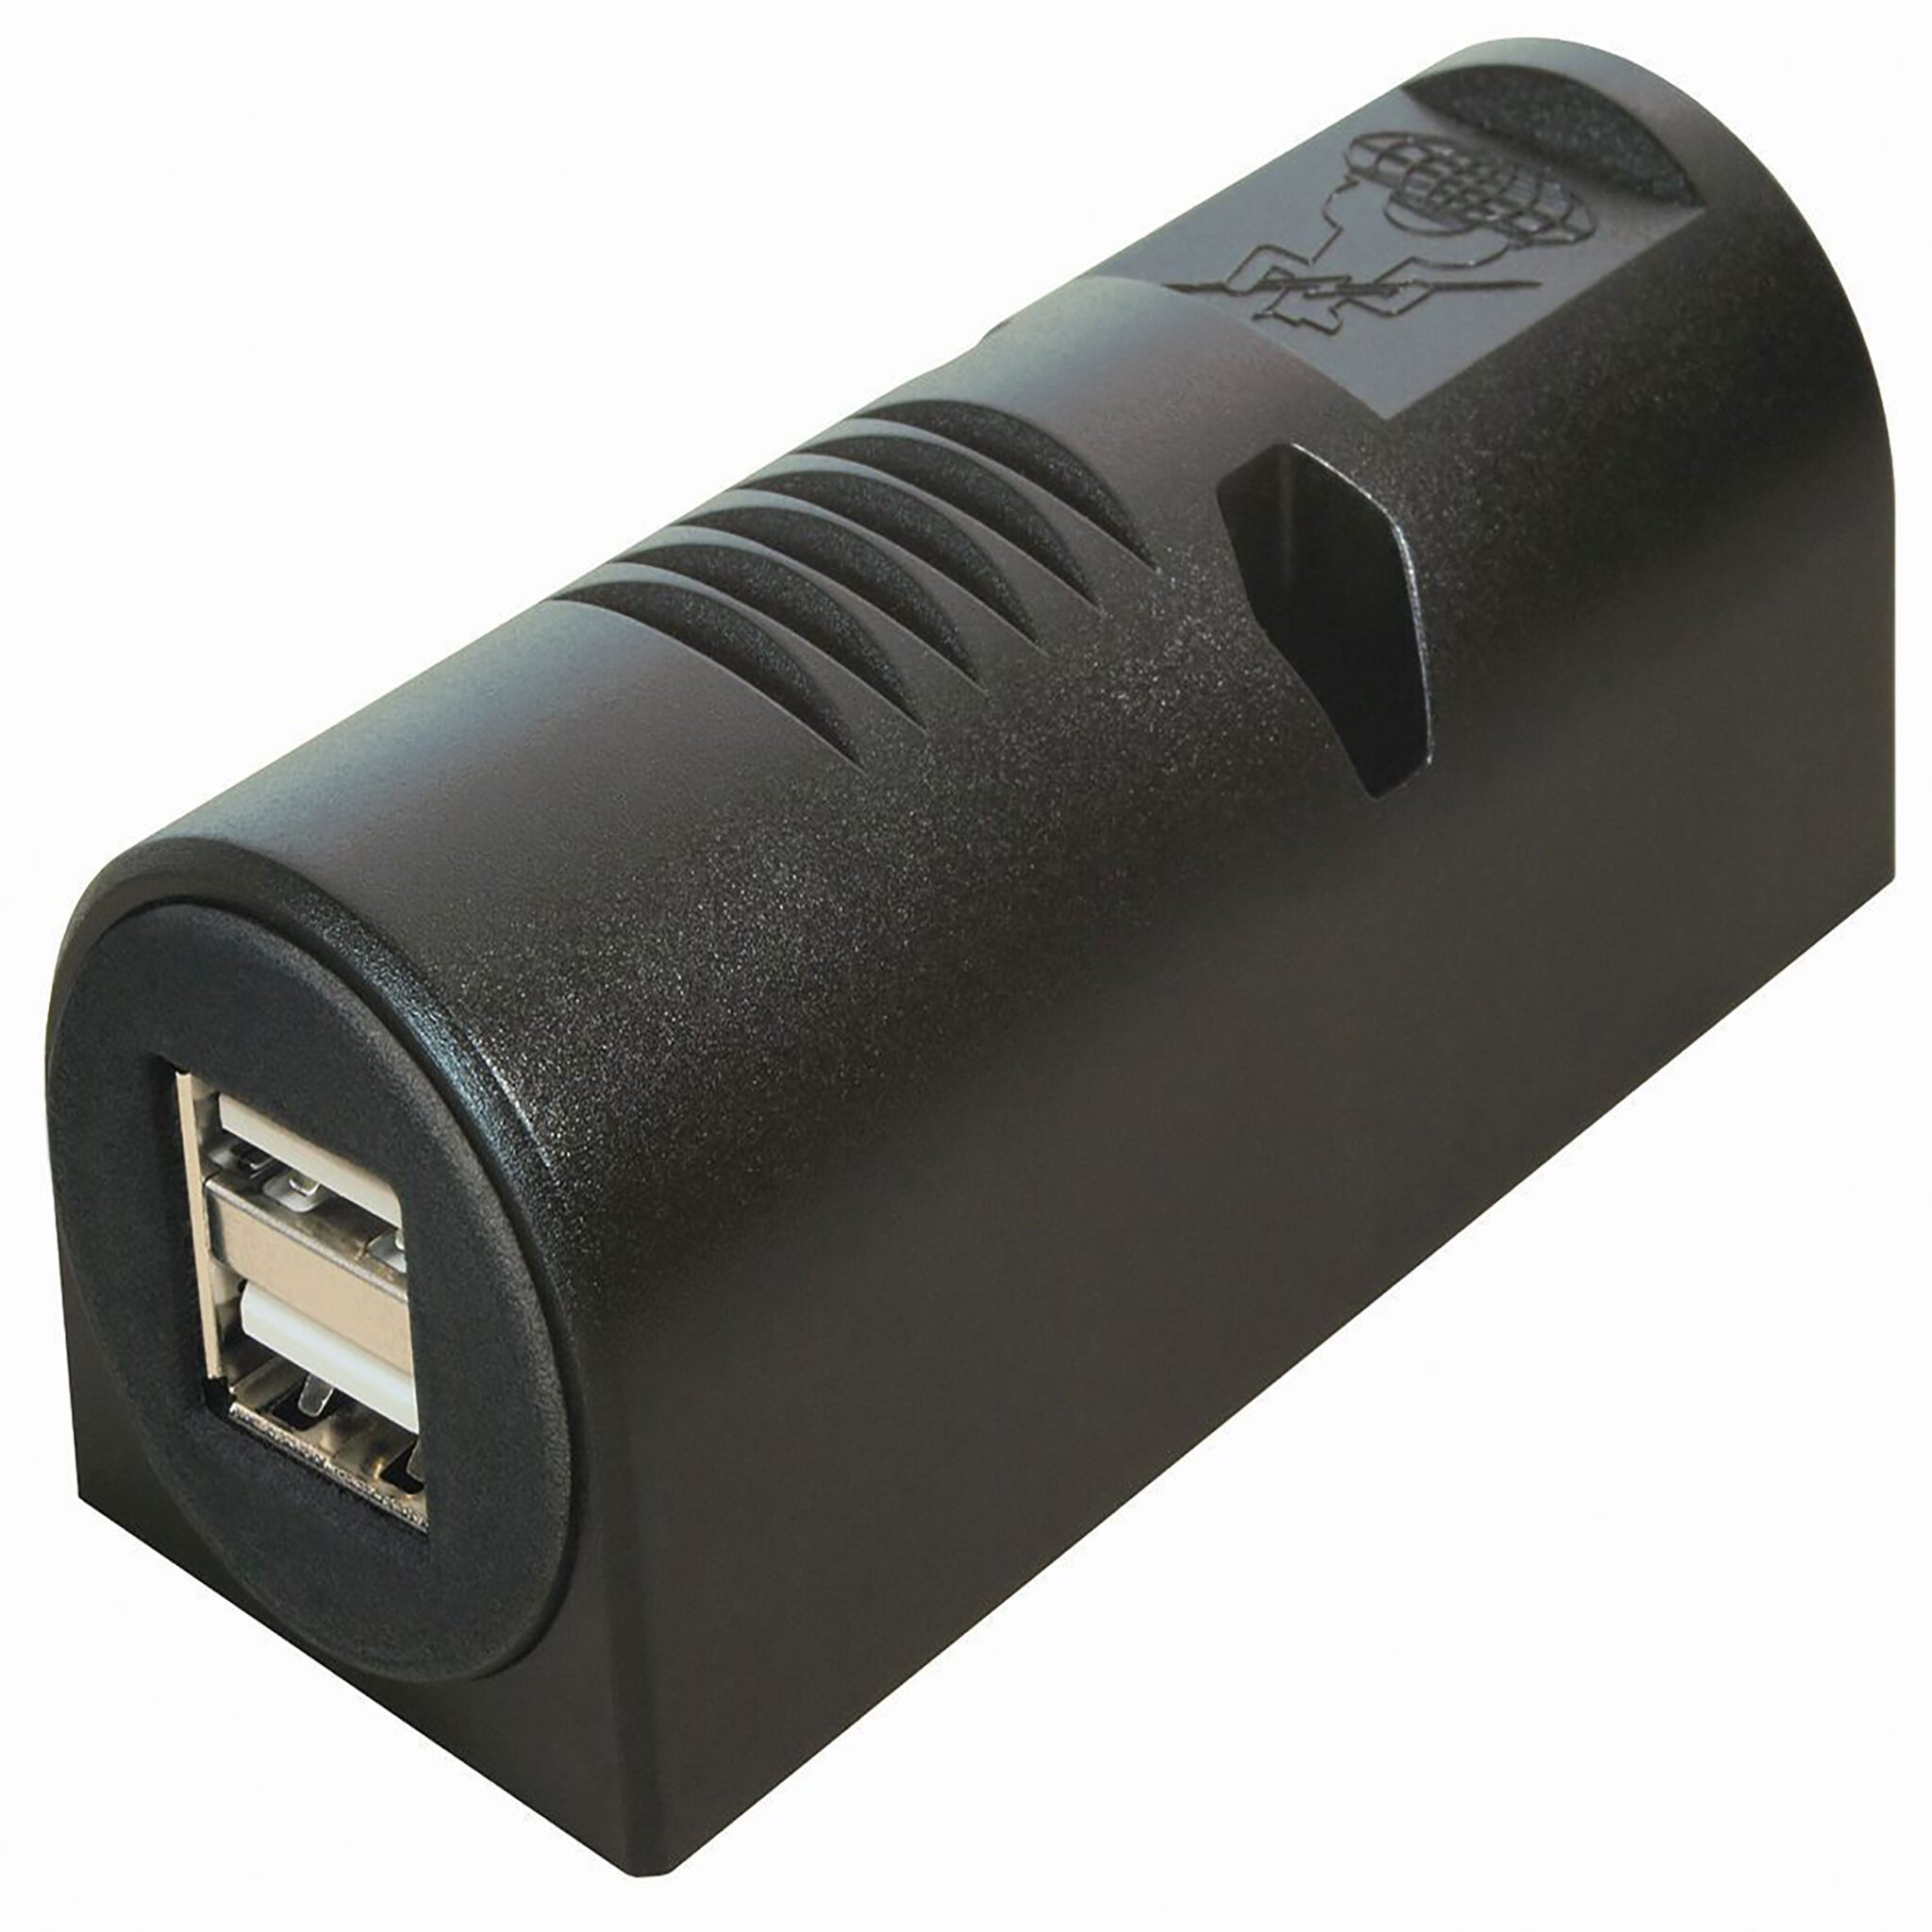 USB dual charging socket